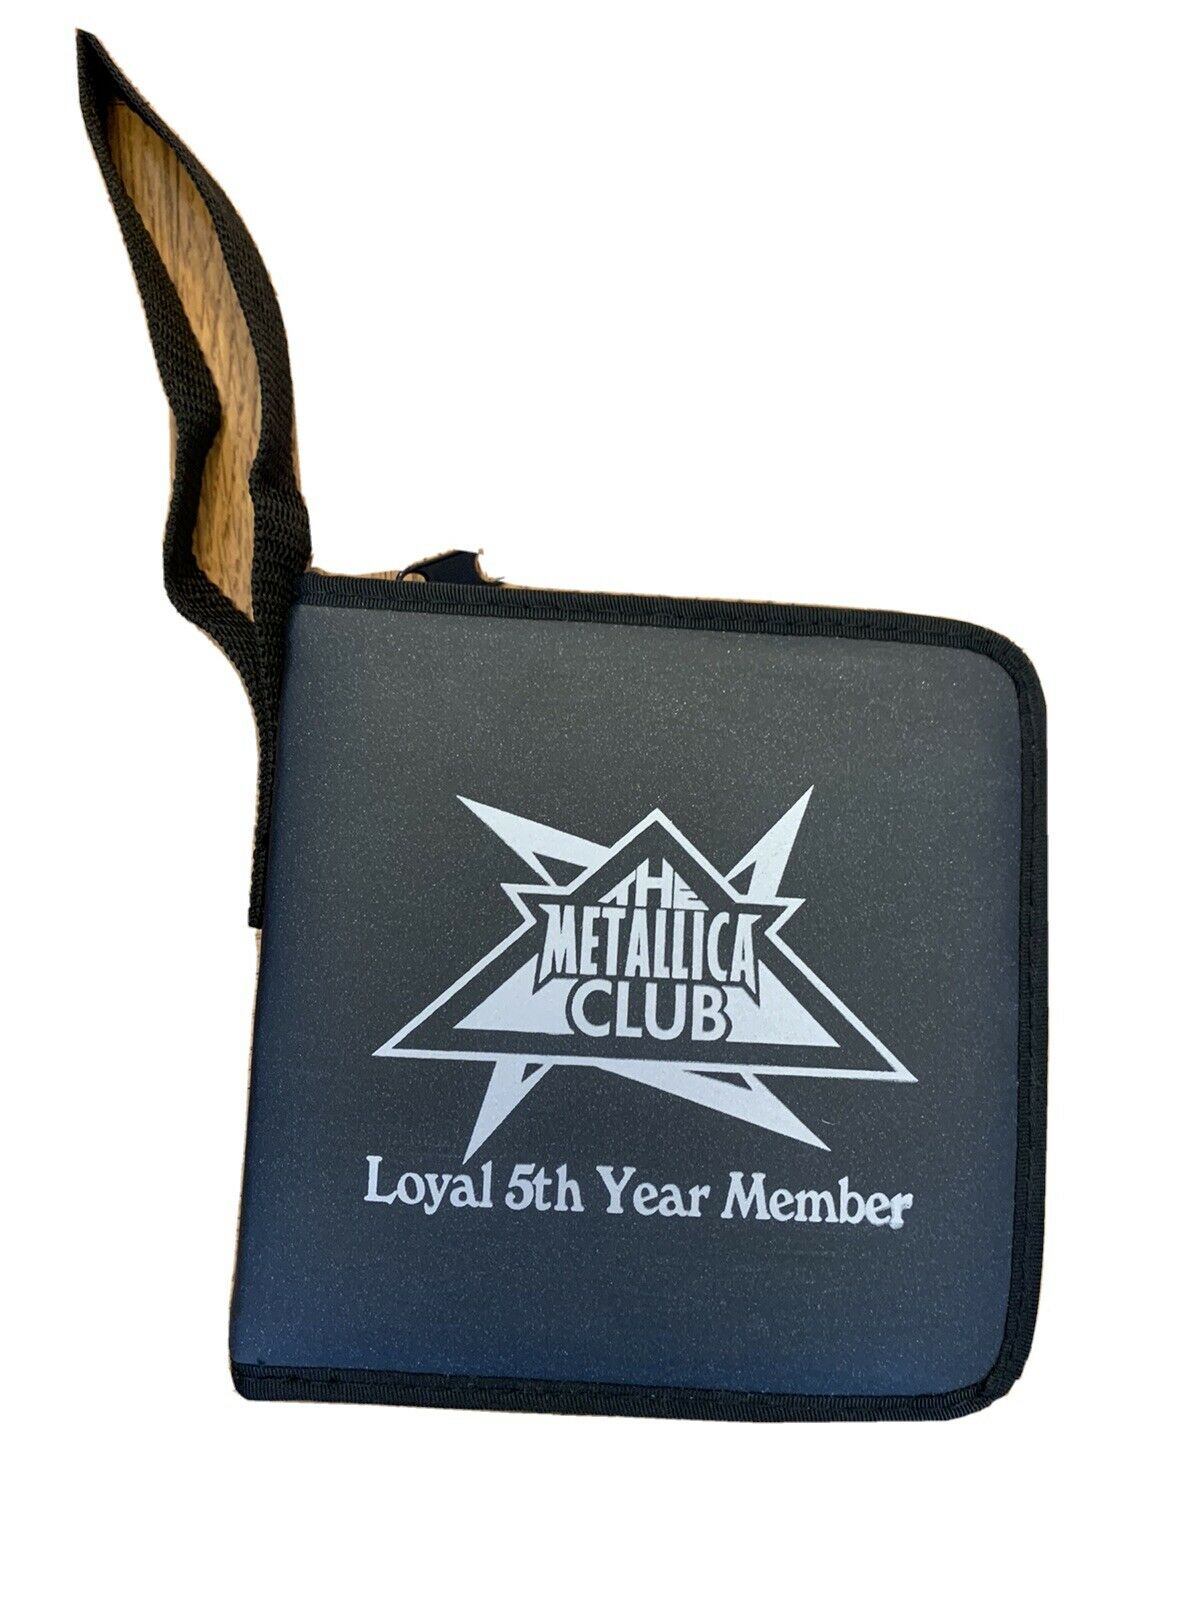 Rare Metallica Club Cd Case Loyal 5th Year Member Metclub - Never Used